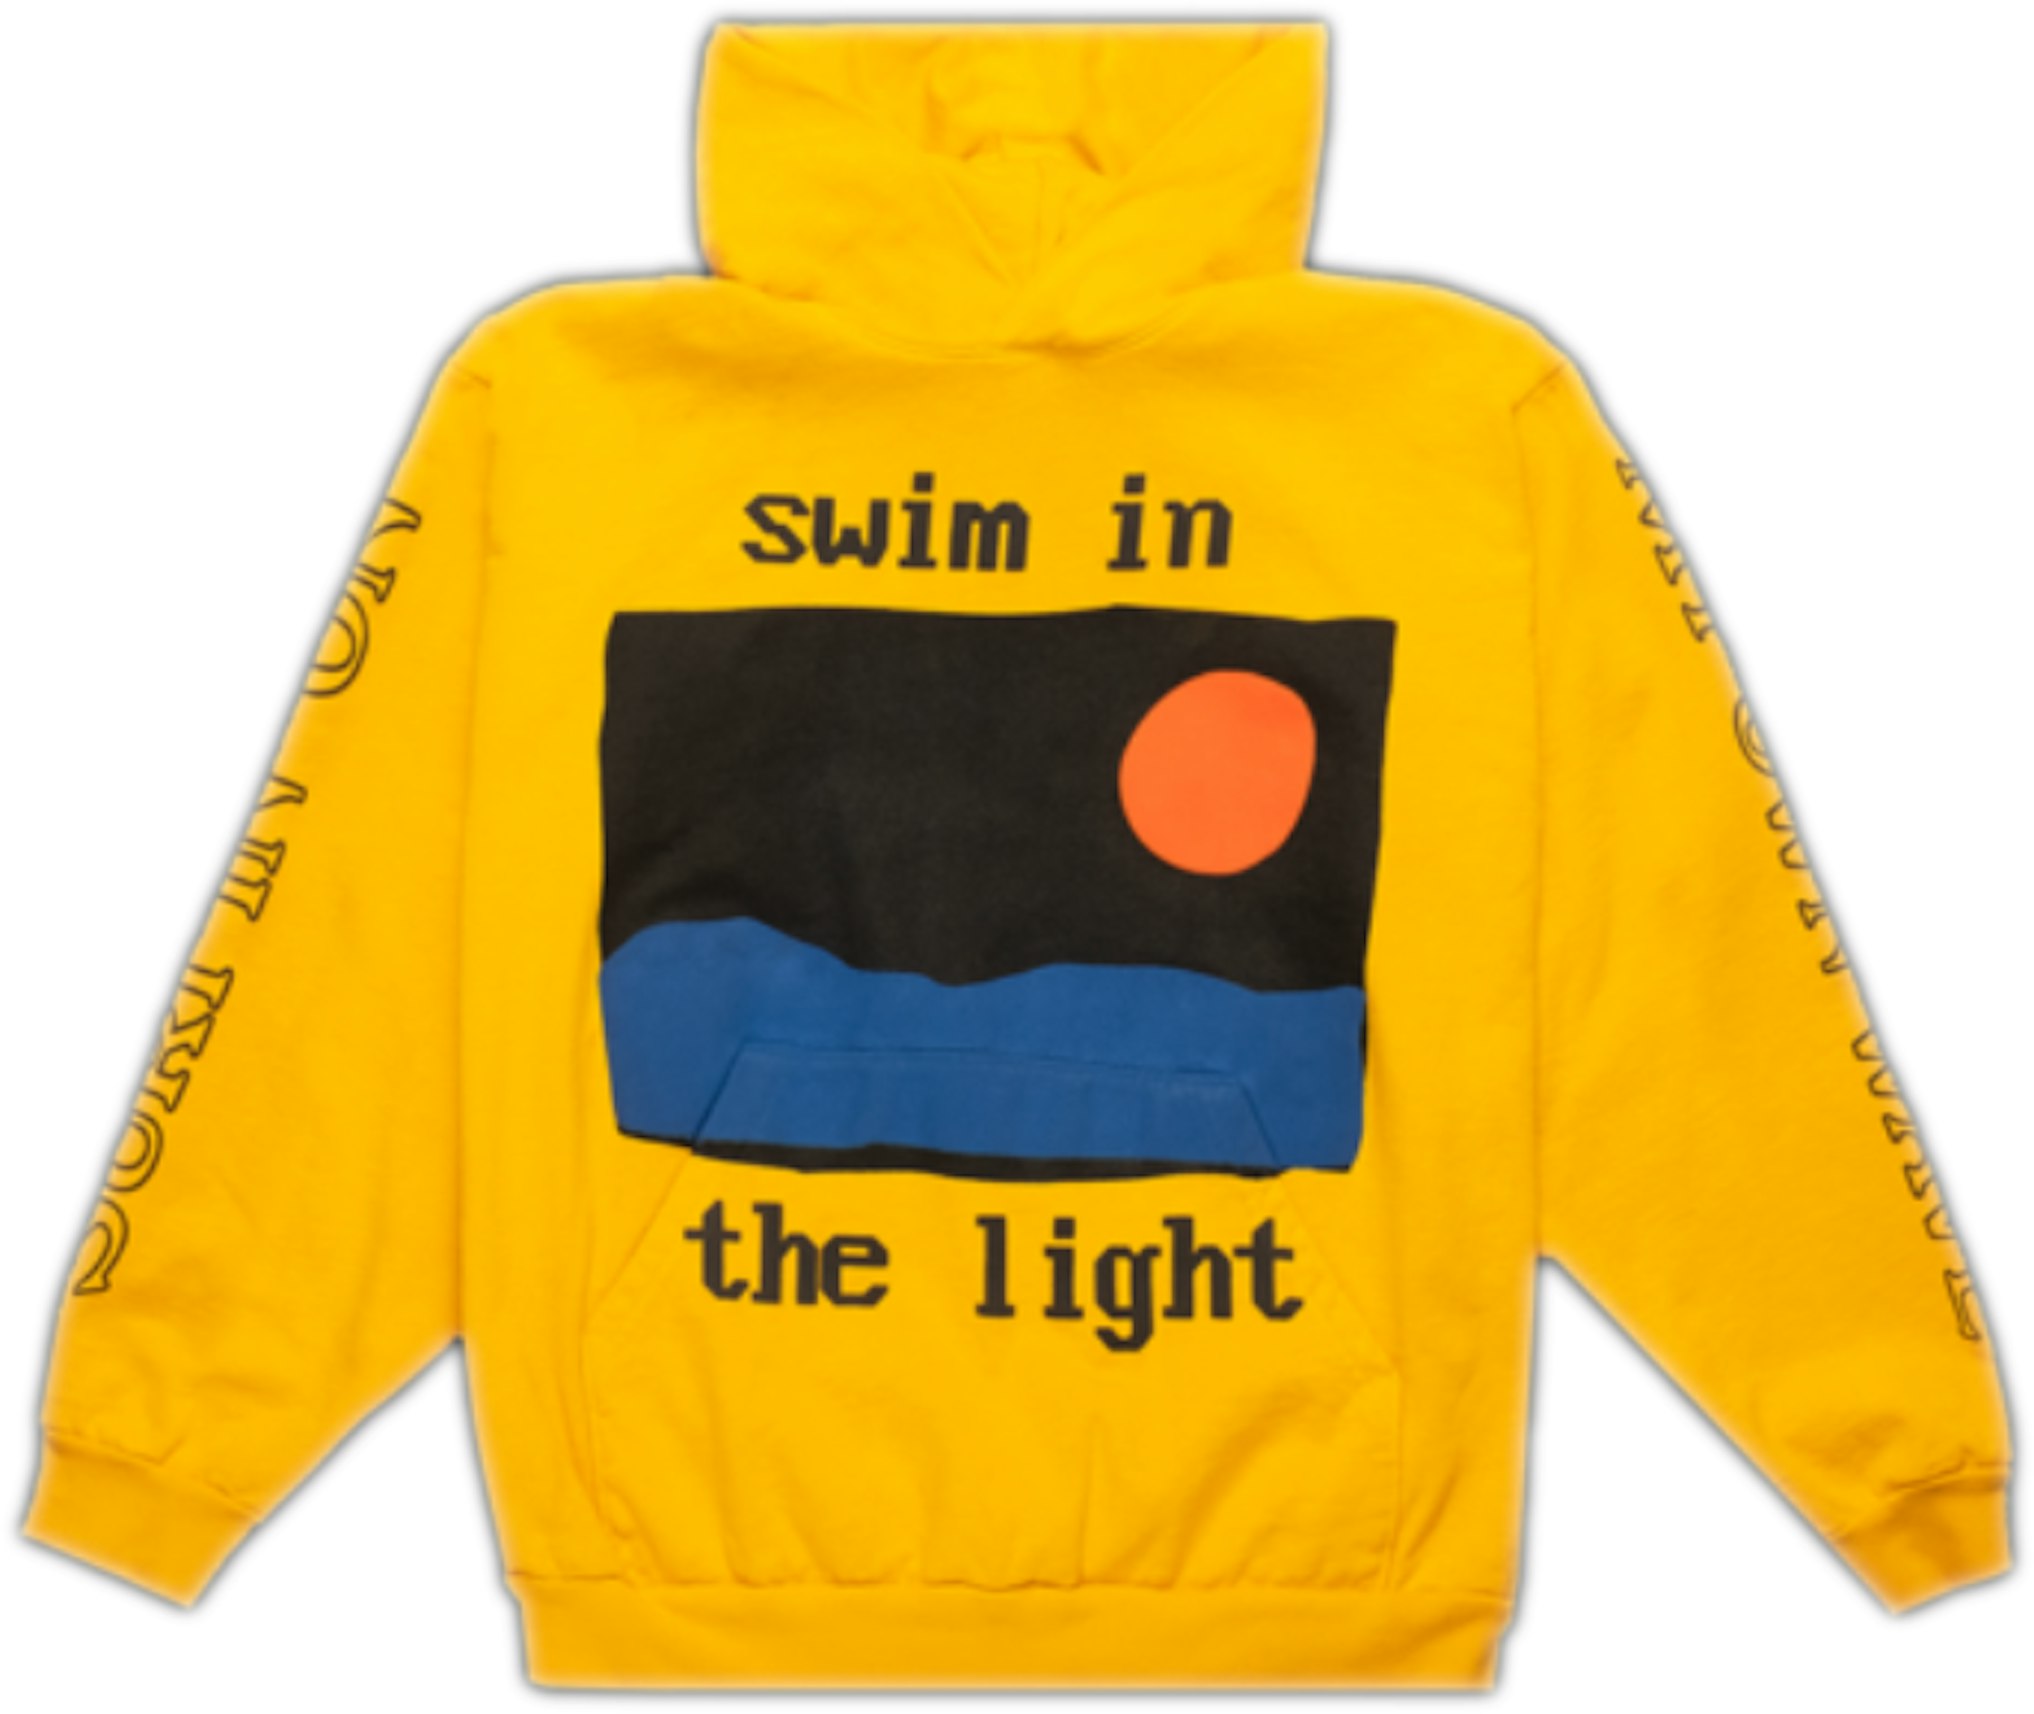 Swim In The Light Yellow - SS19 Men's - US